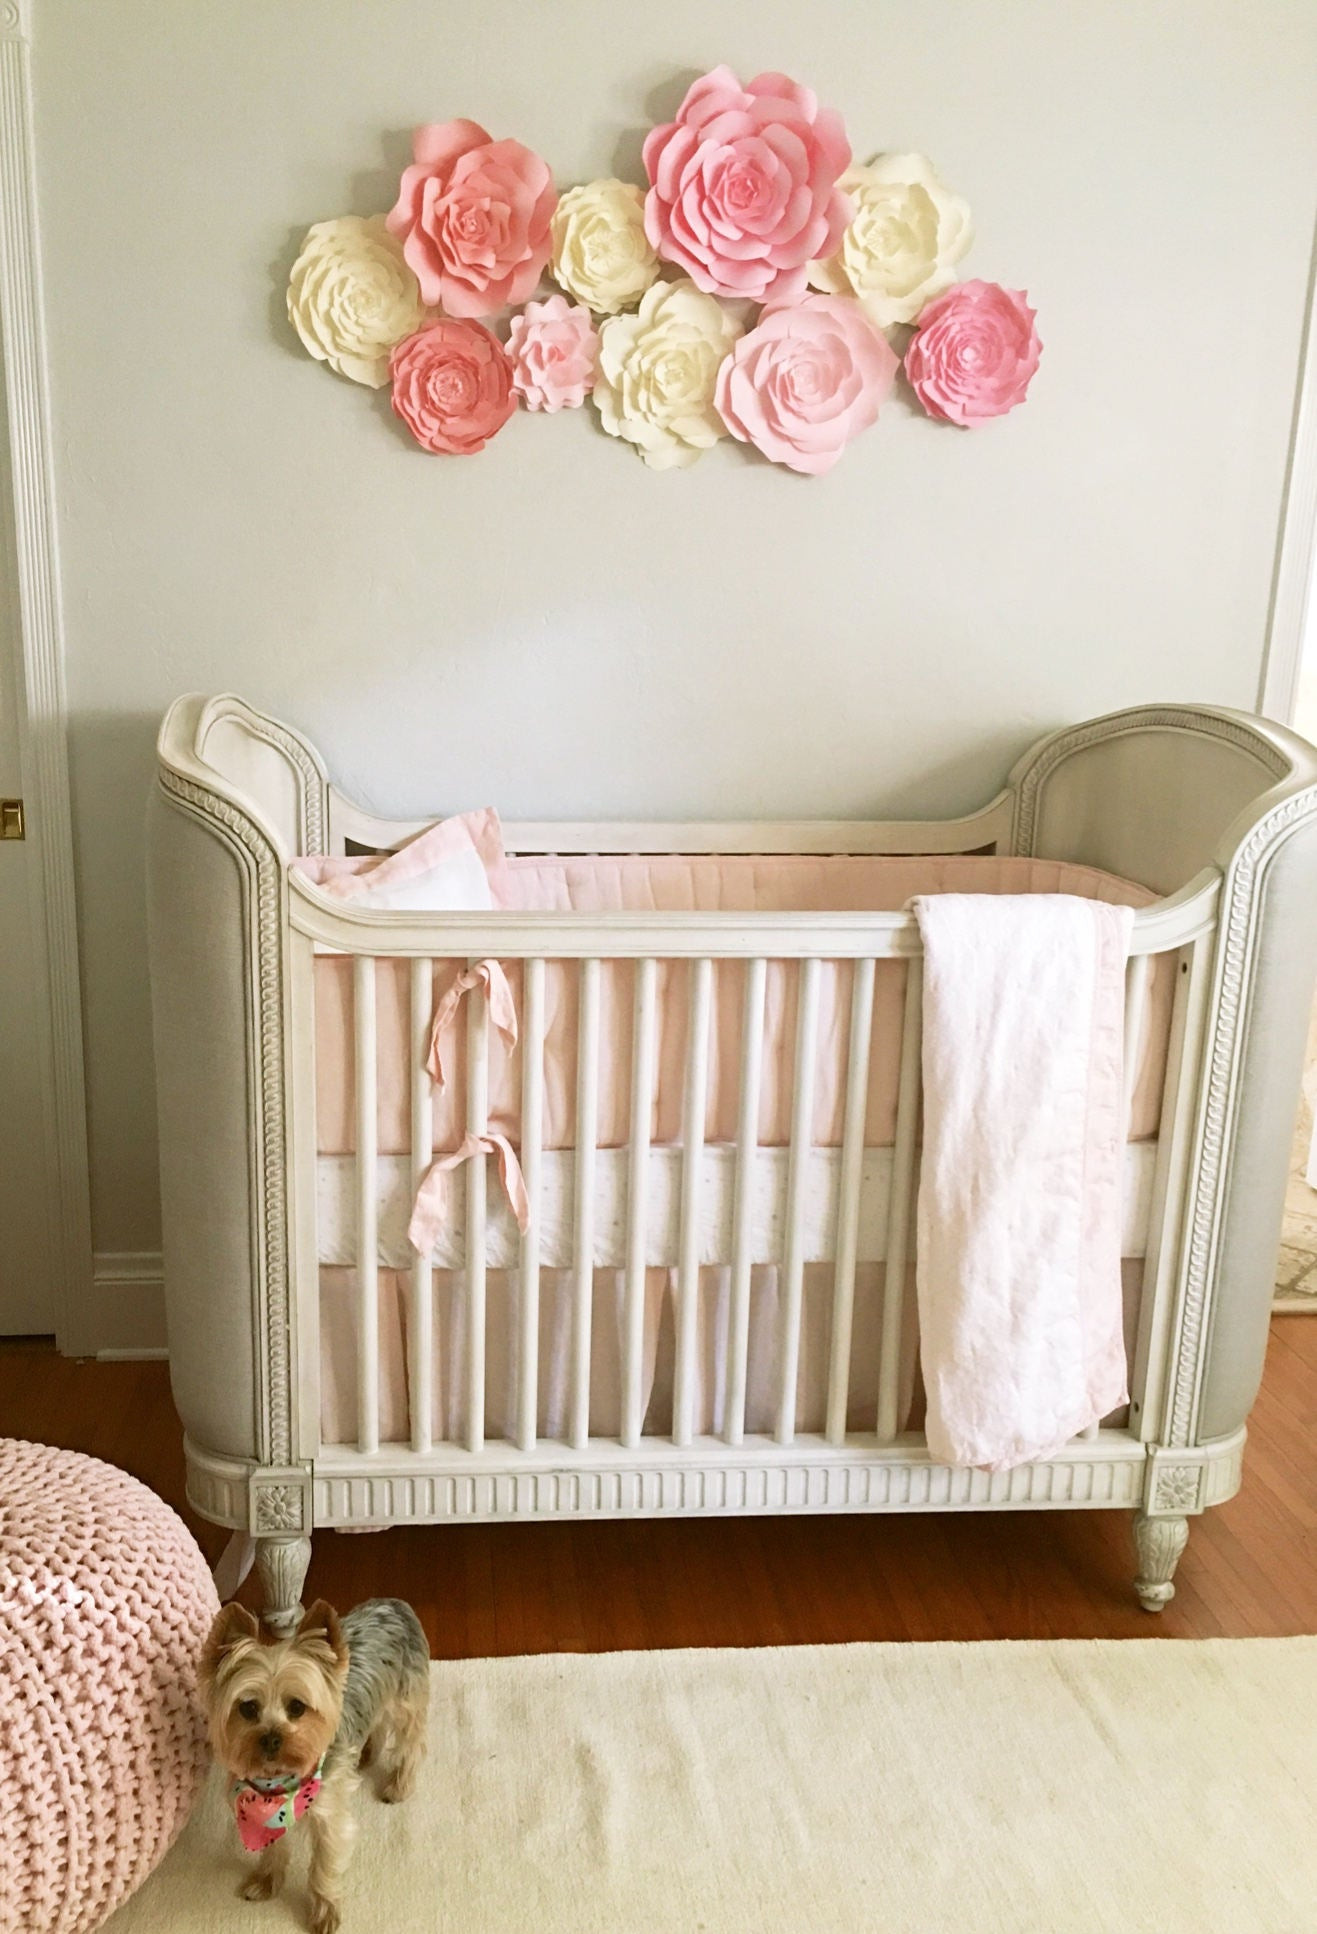 Baby Decor For Nursery
 Baby nursery wall decor paper flowers for girls nursery